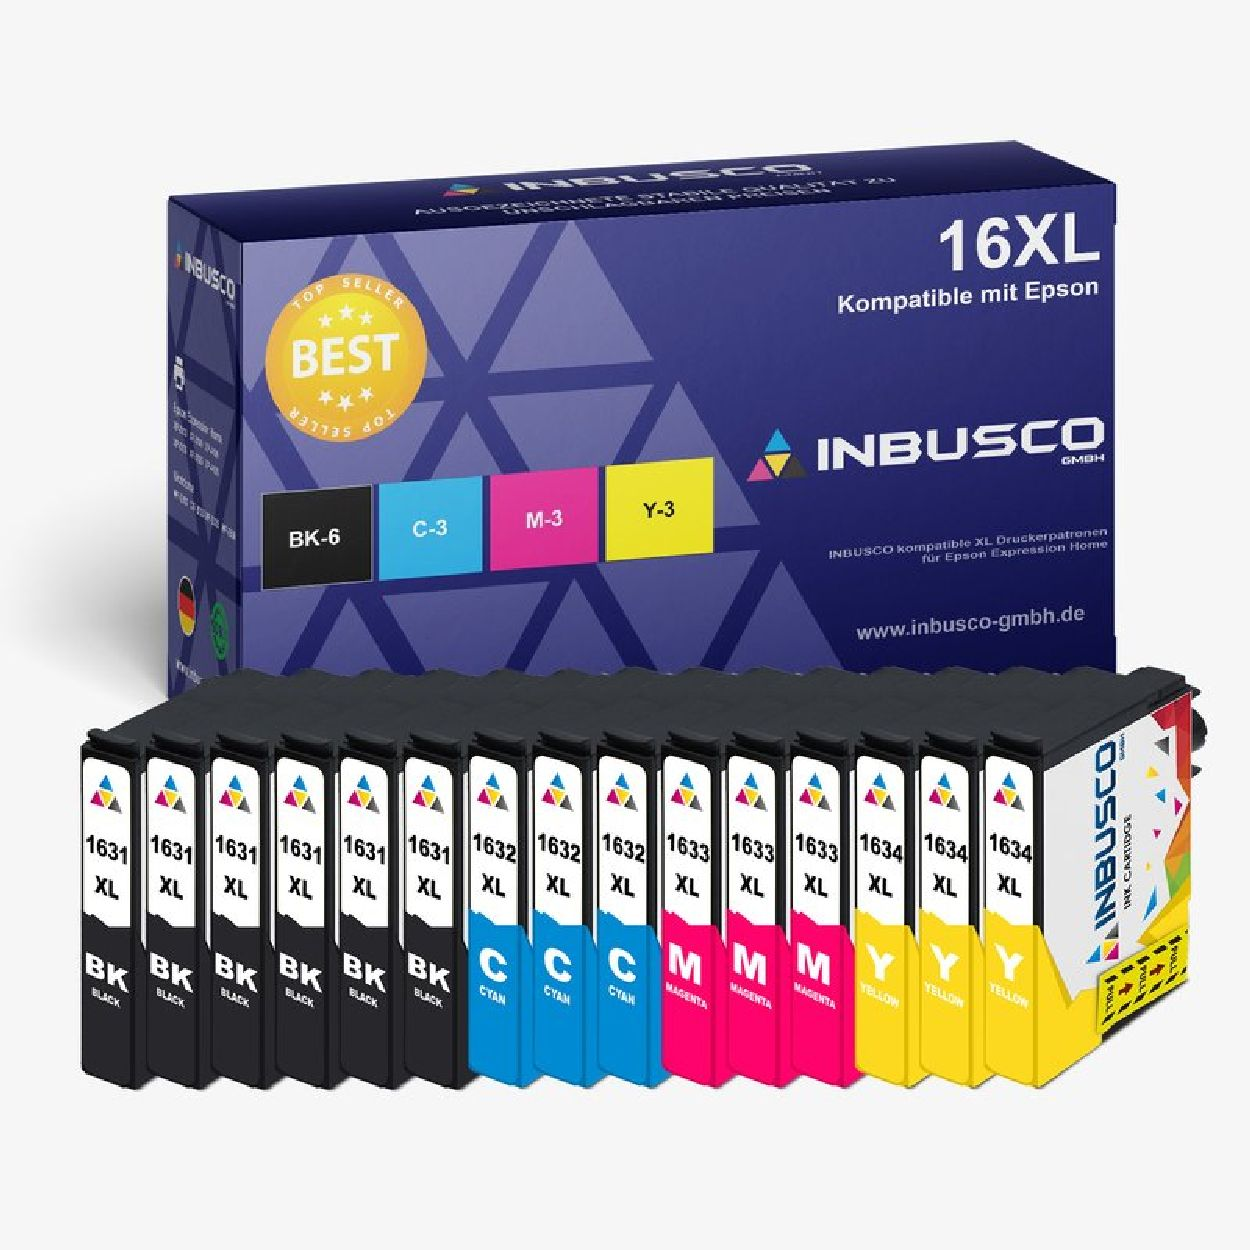 INBUSCO / KUBIS SET 16xl Mehrfarbig Tintenpatrone (15x16XL)